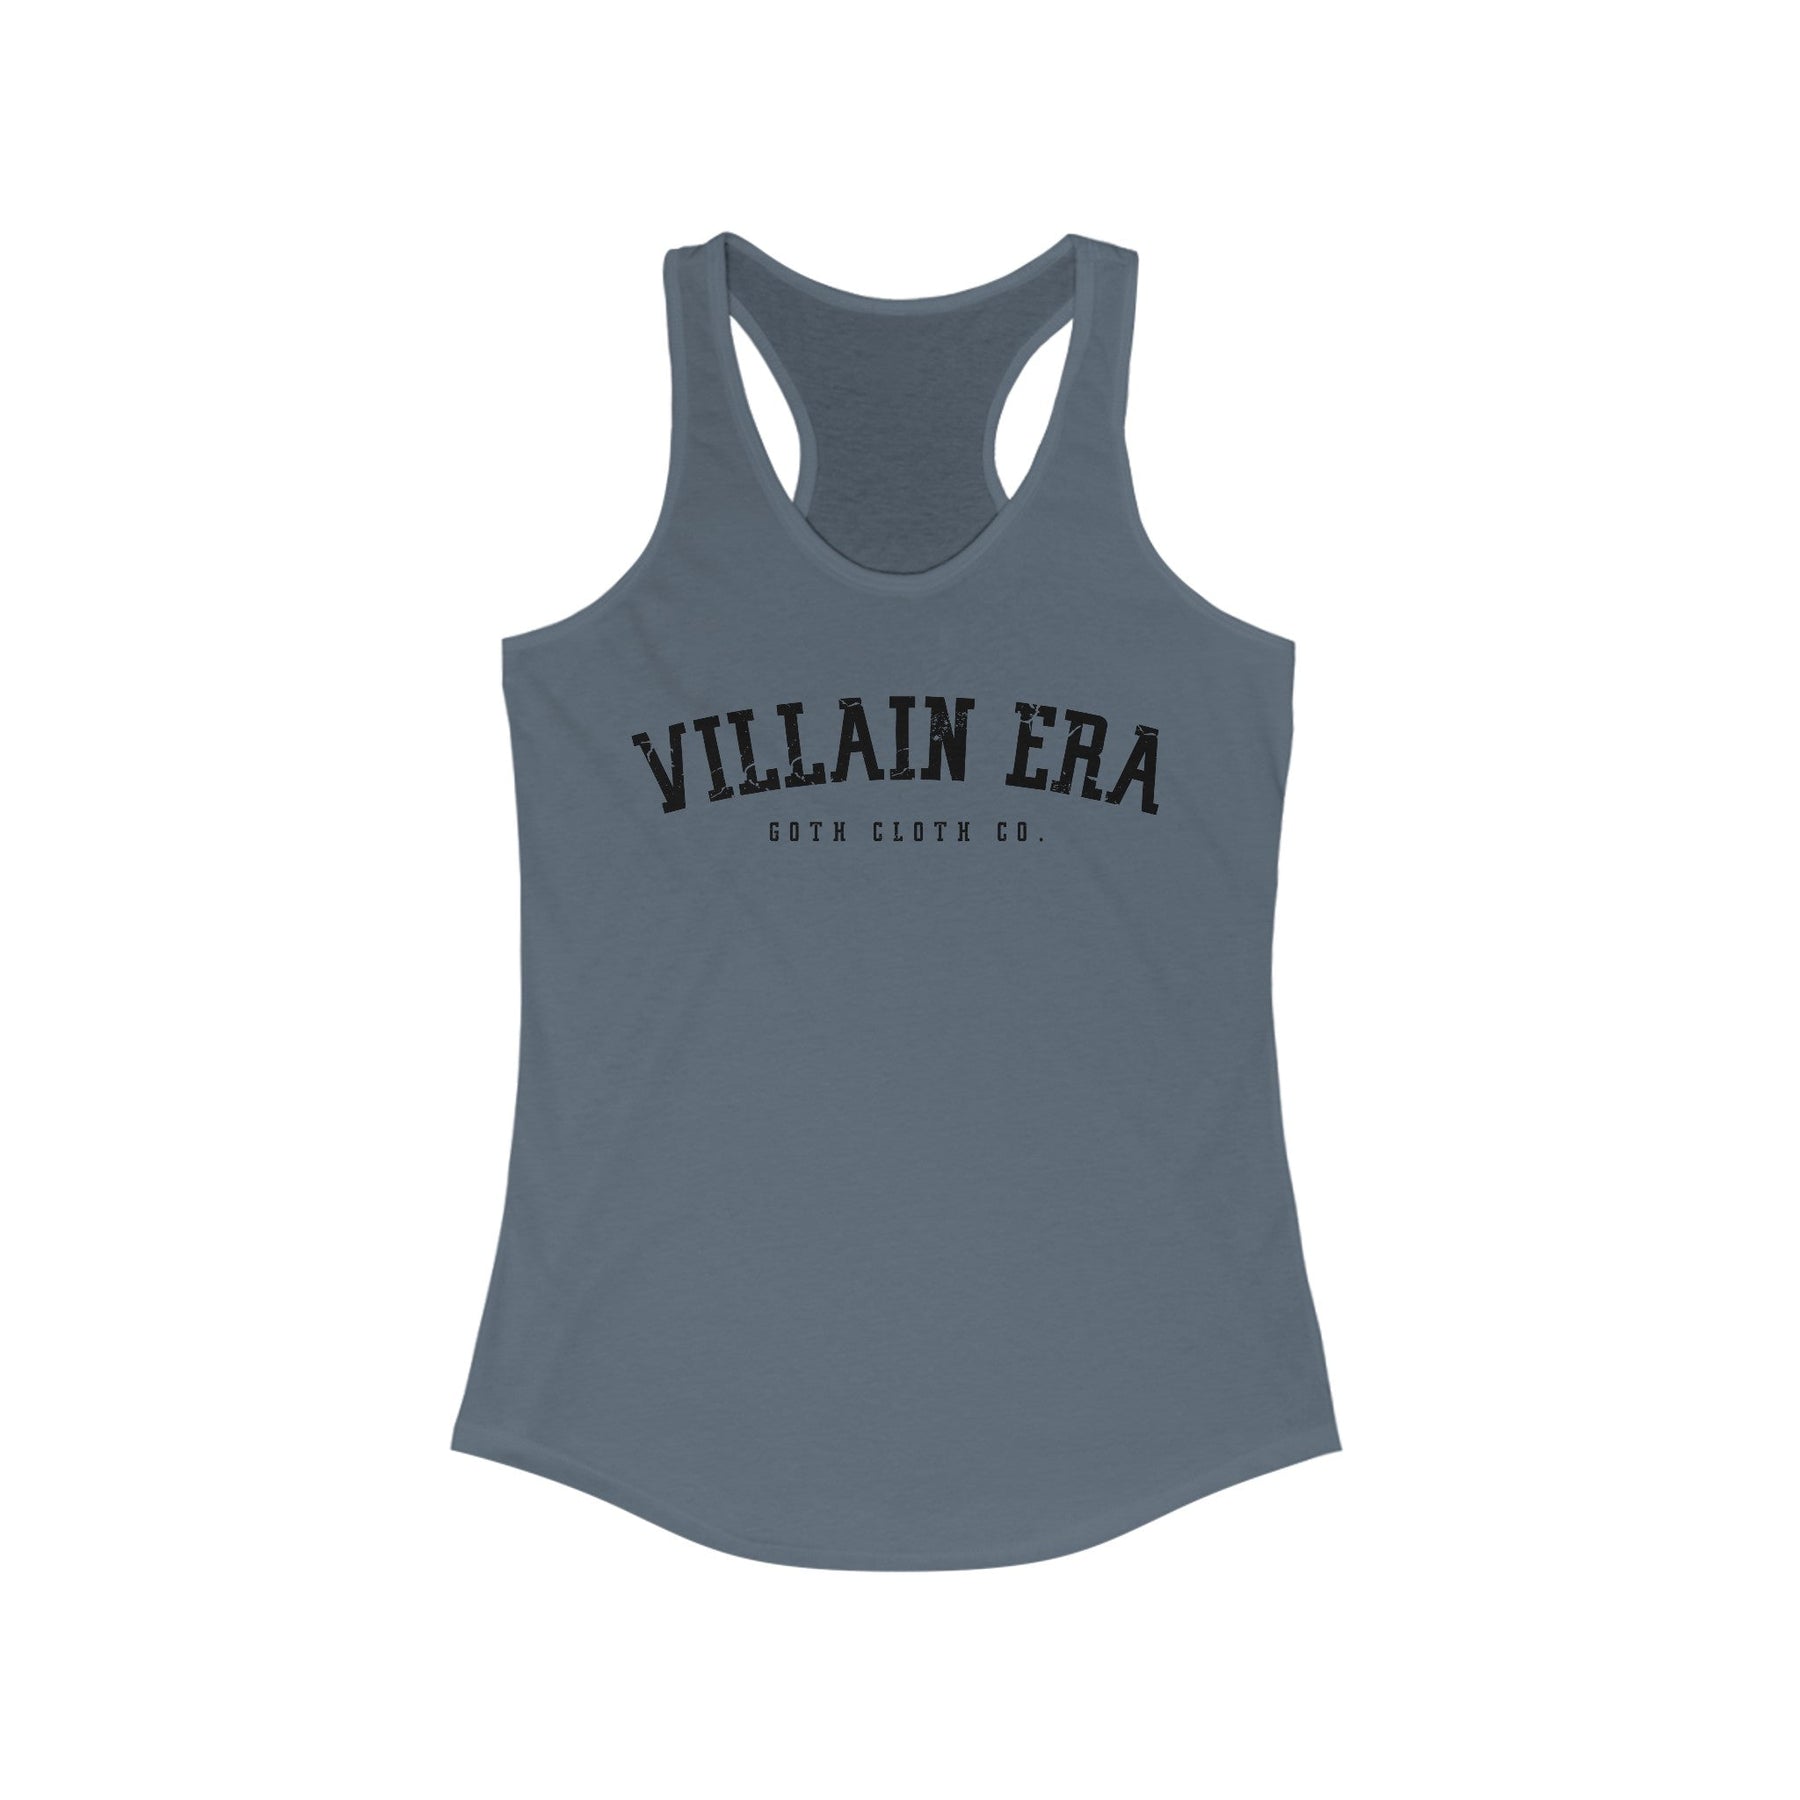 Villain Era Women's Racerback Tank - Goth Cloth Co.Tank Top14024185758937208904